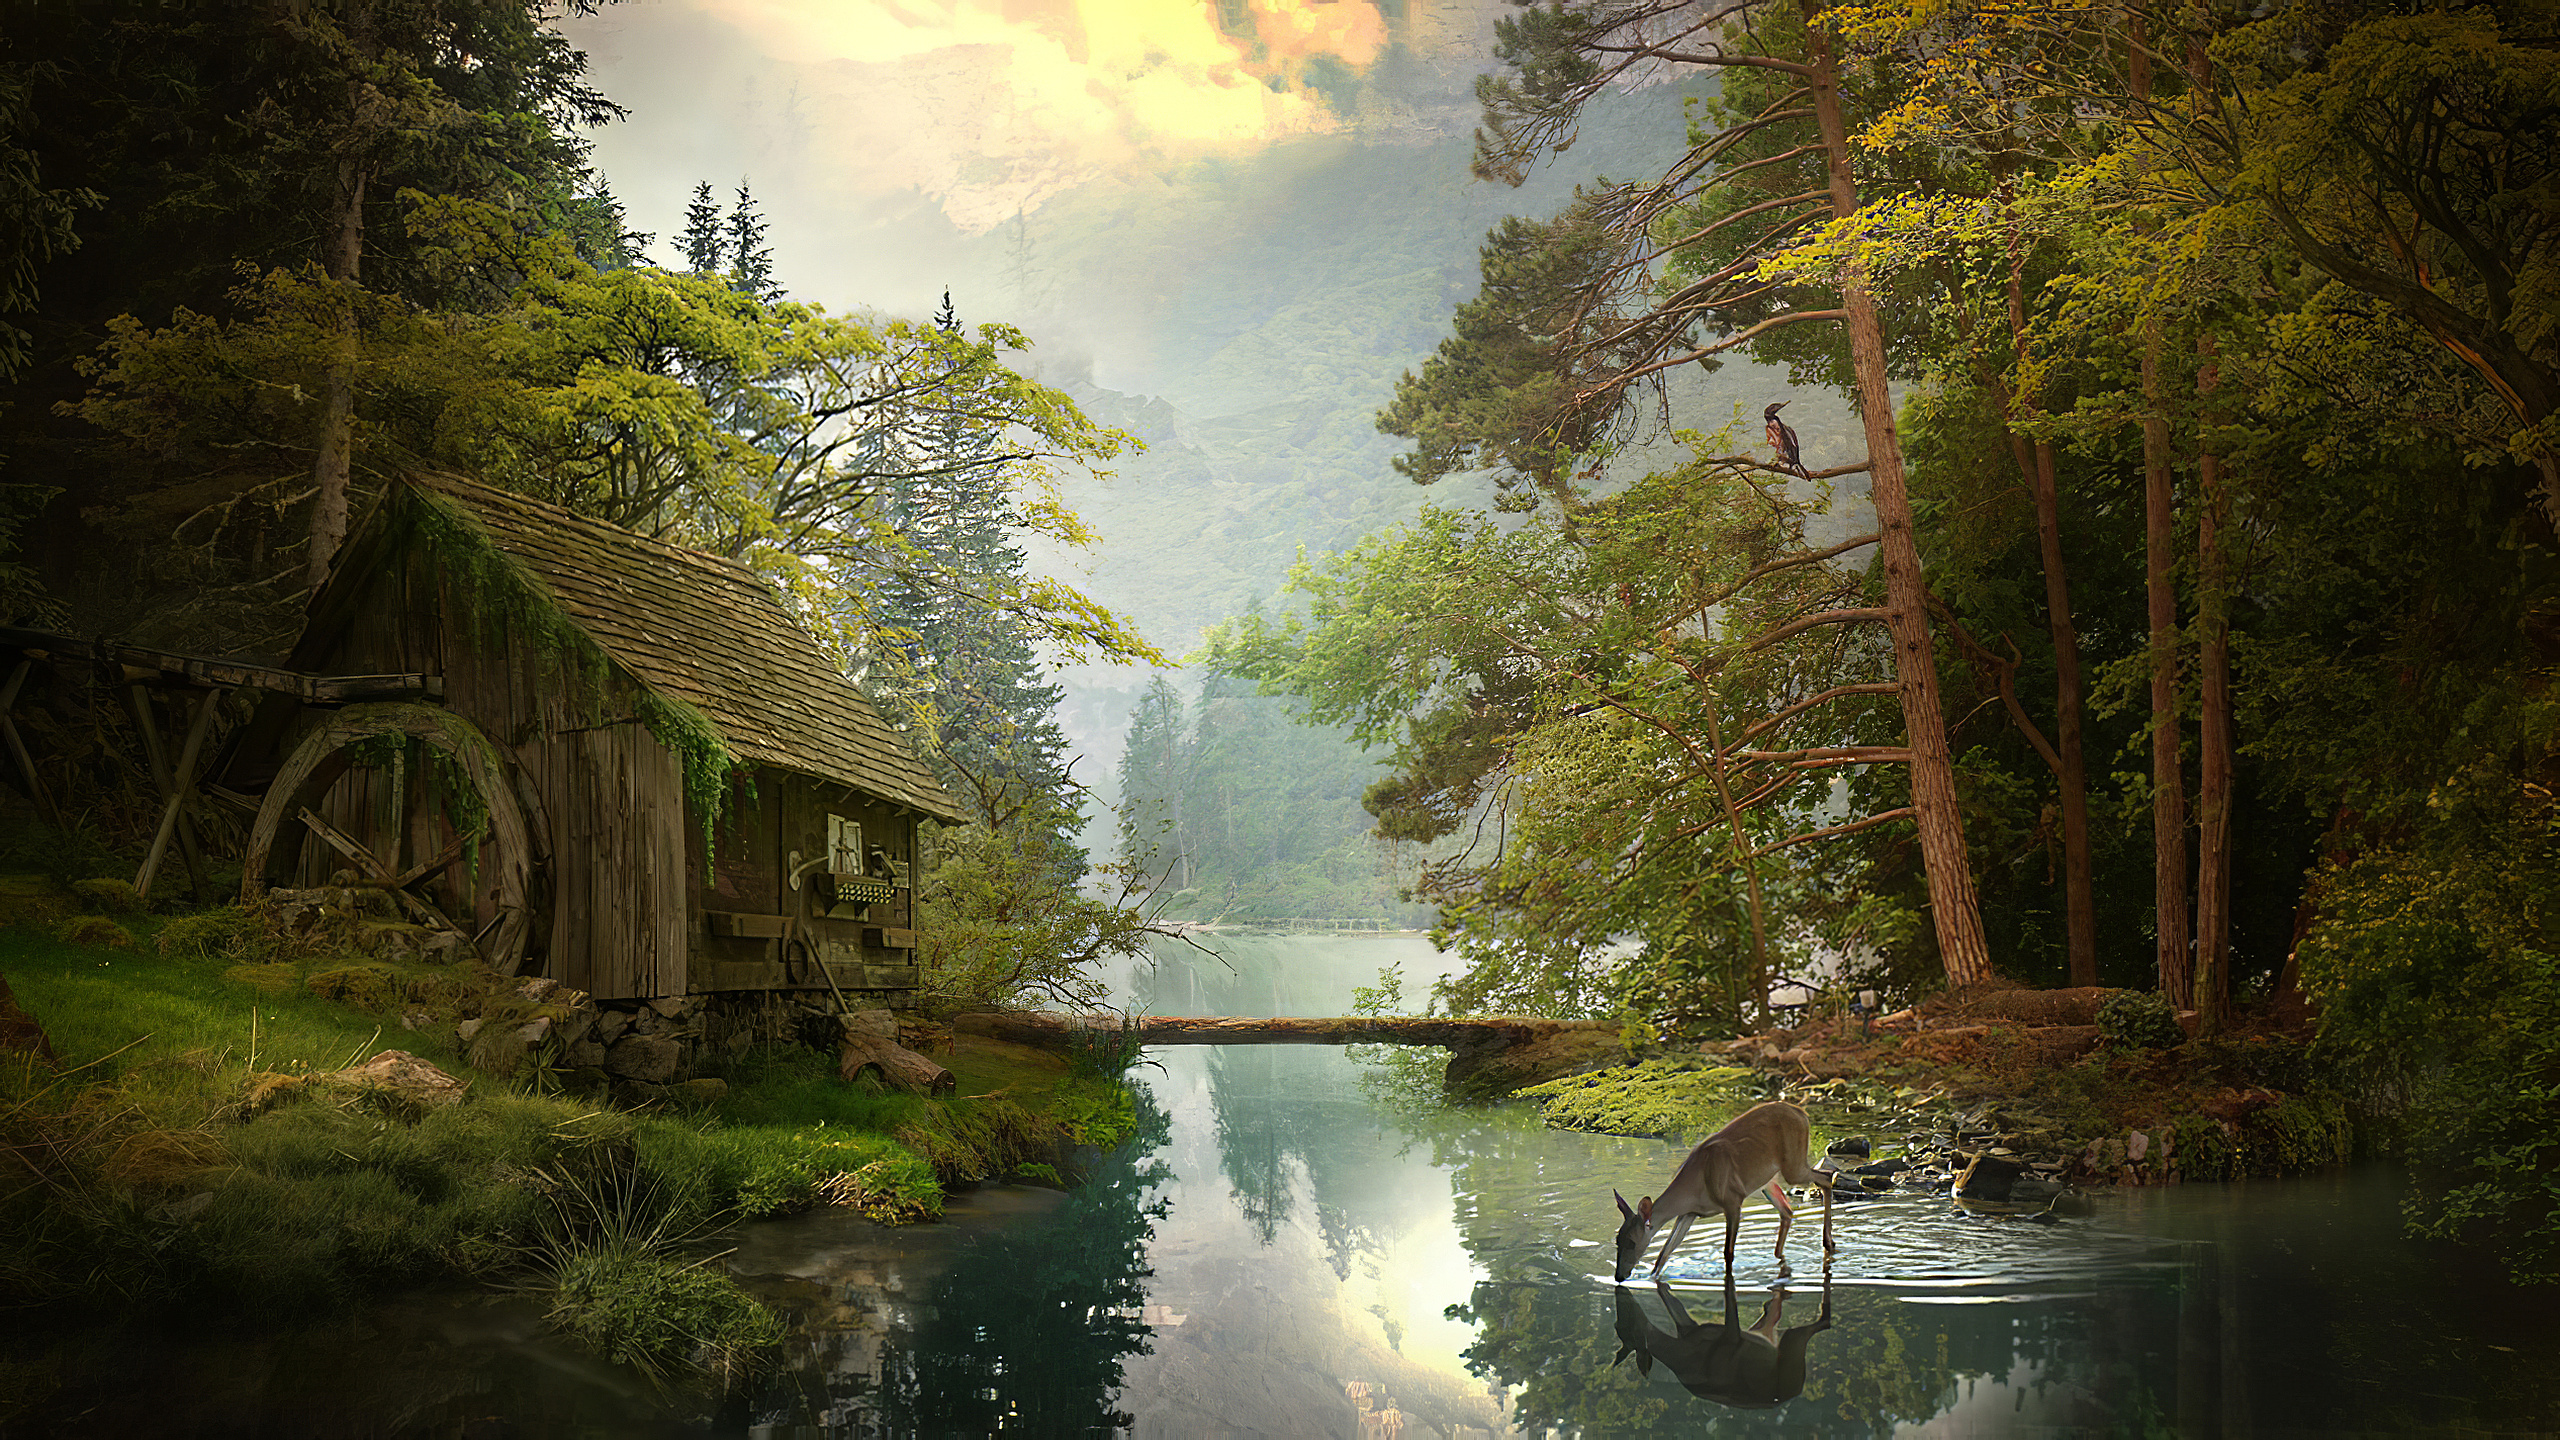 Digital Digital Art Landscape Nature Forest Trees Water River Deer Mill 2560x1440